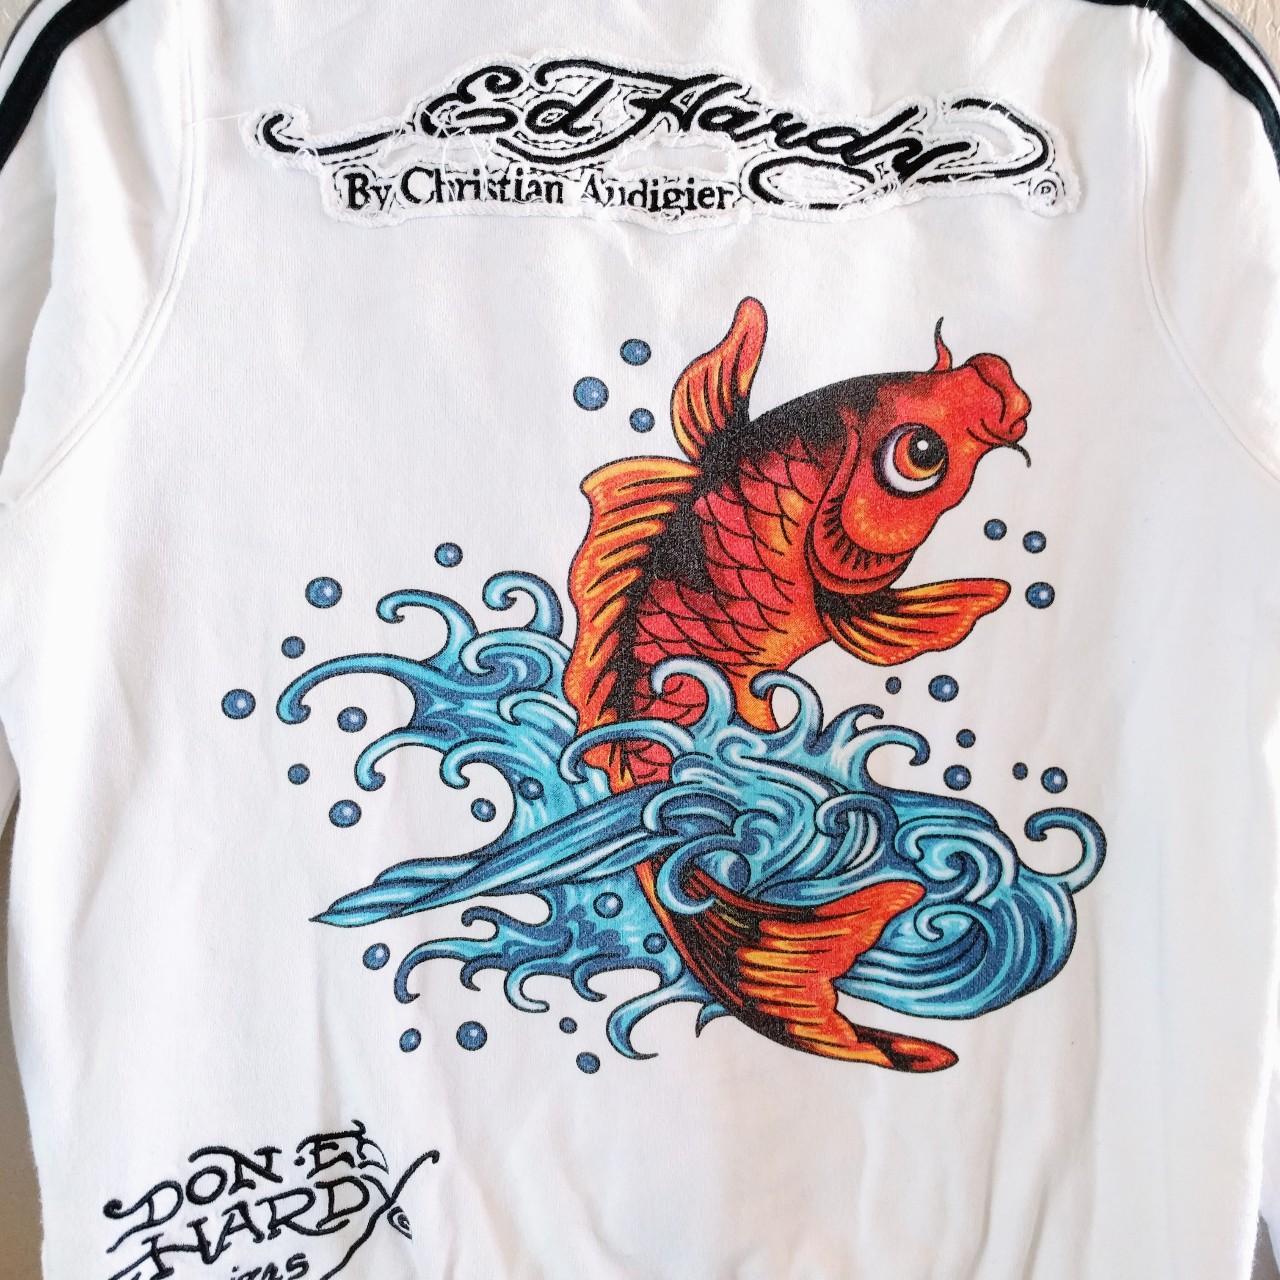 Vintage Ed Hardy by Christian Audigier koi fish embroidered logo